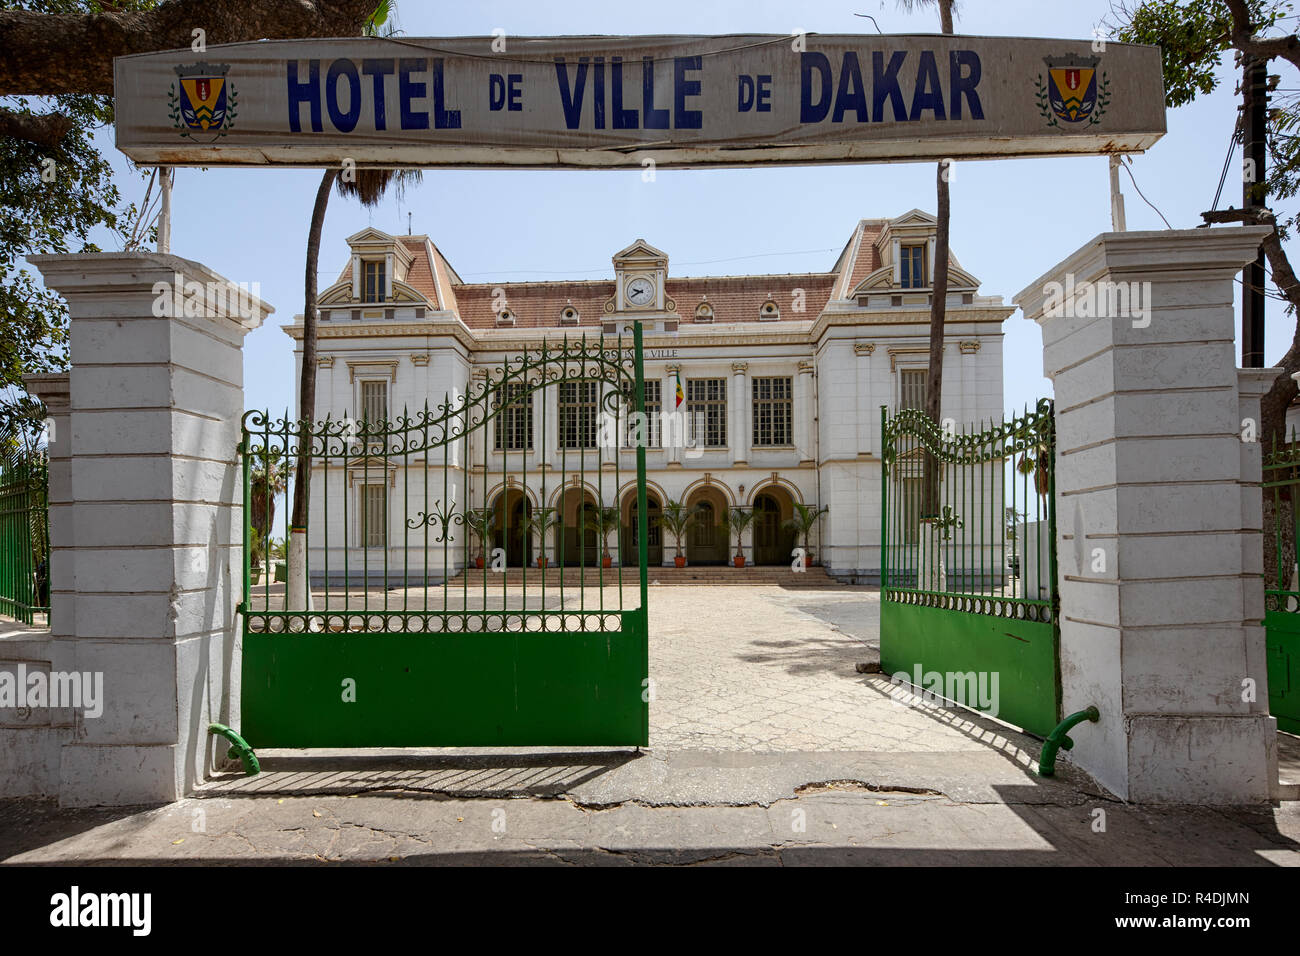 Entrance gate of Hotel de Ville de Dakar, Dakar City Hall in Dakar, Senegal, Africa Stock Photo